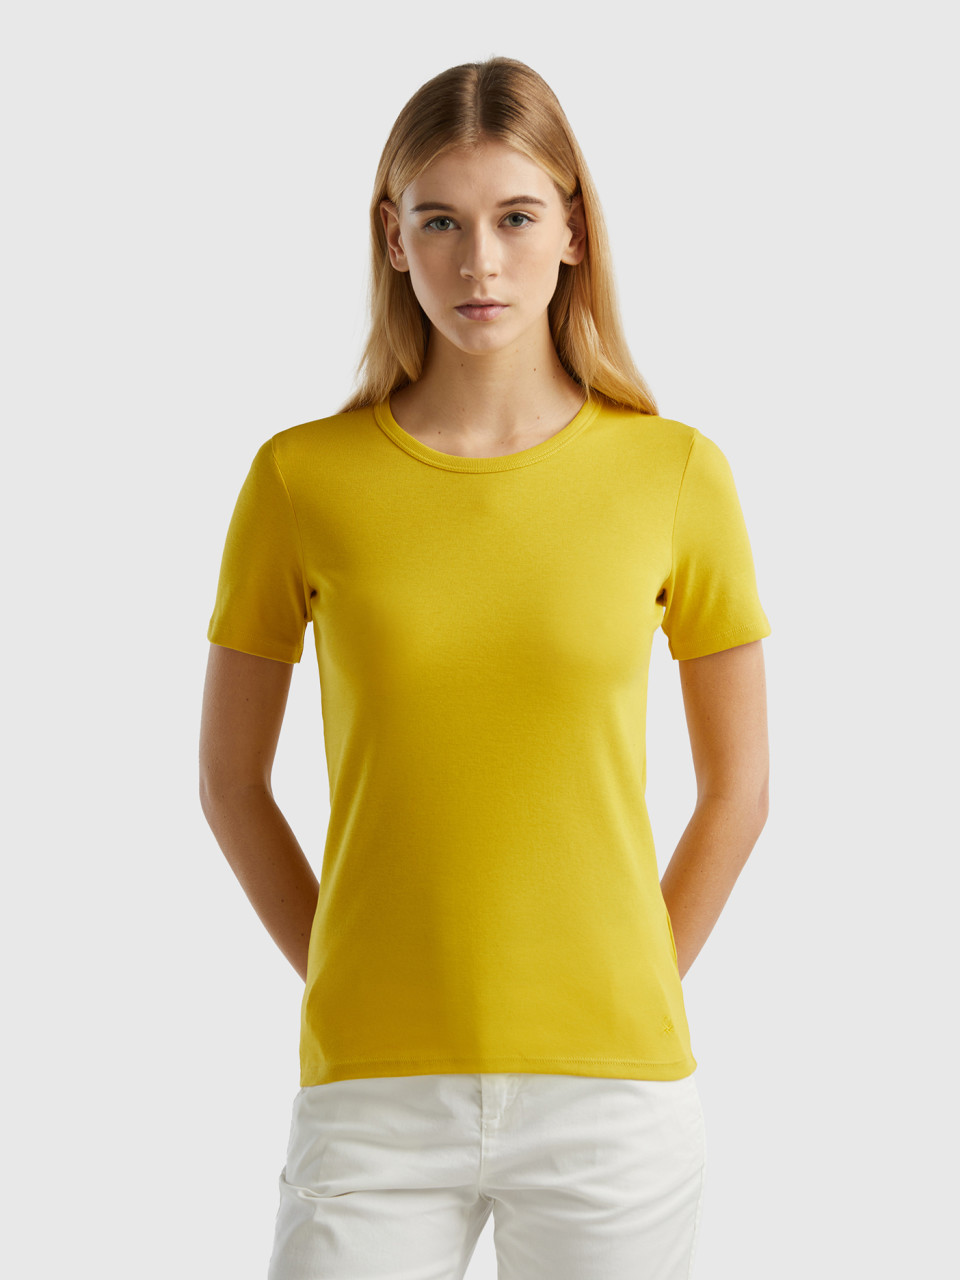 Benetton, Long Fiber Cotton T-shirt, Yellow, Women